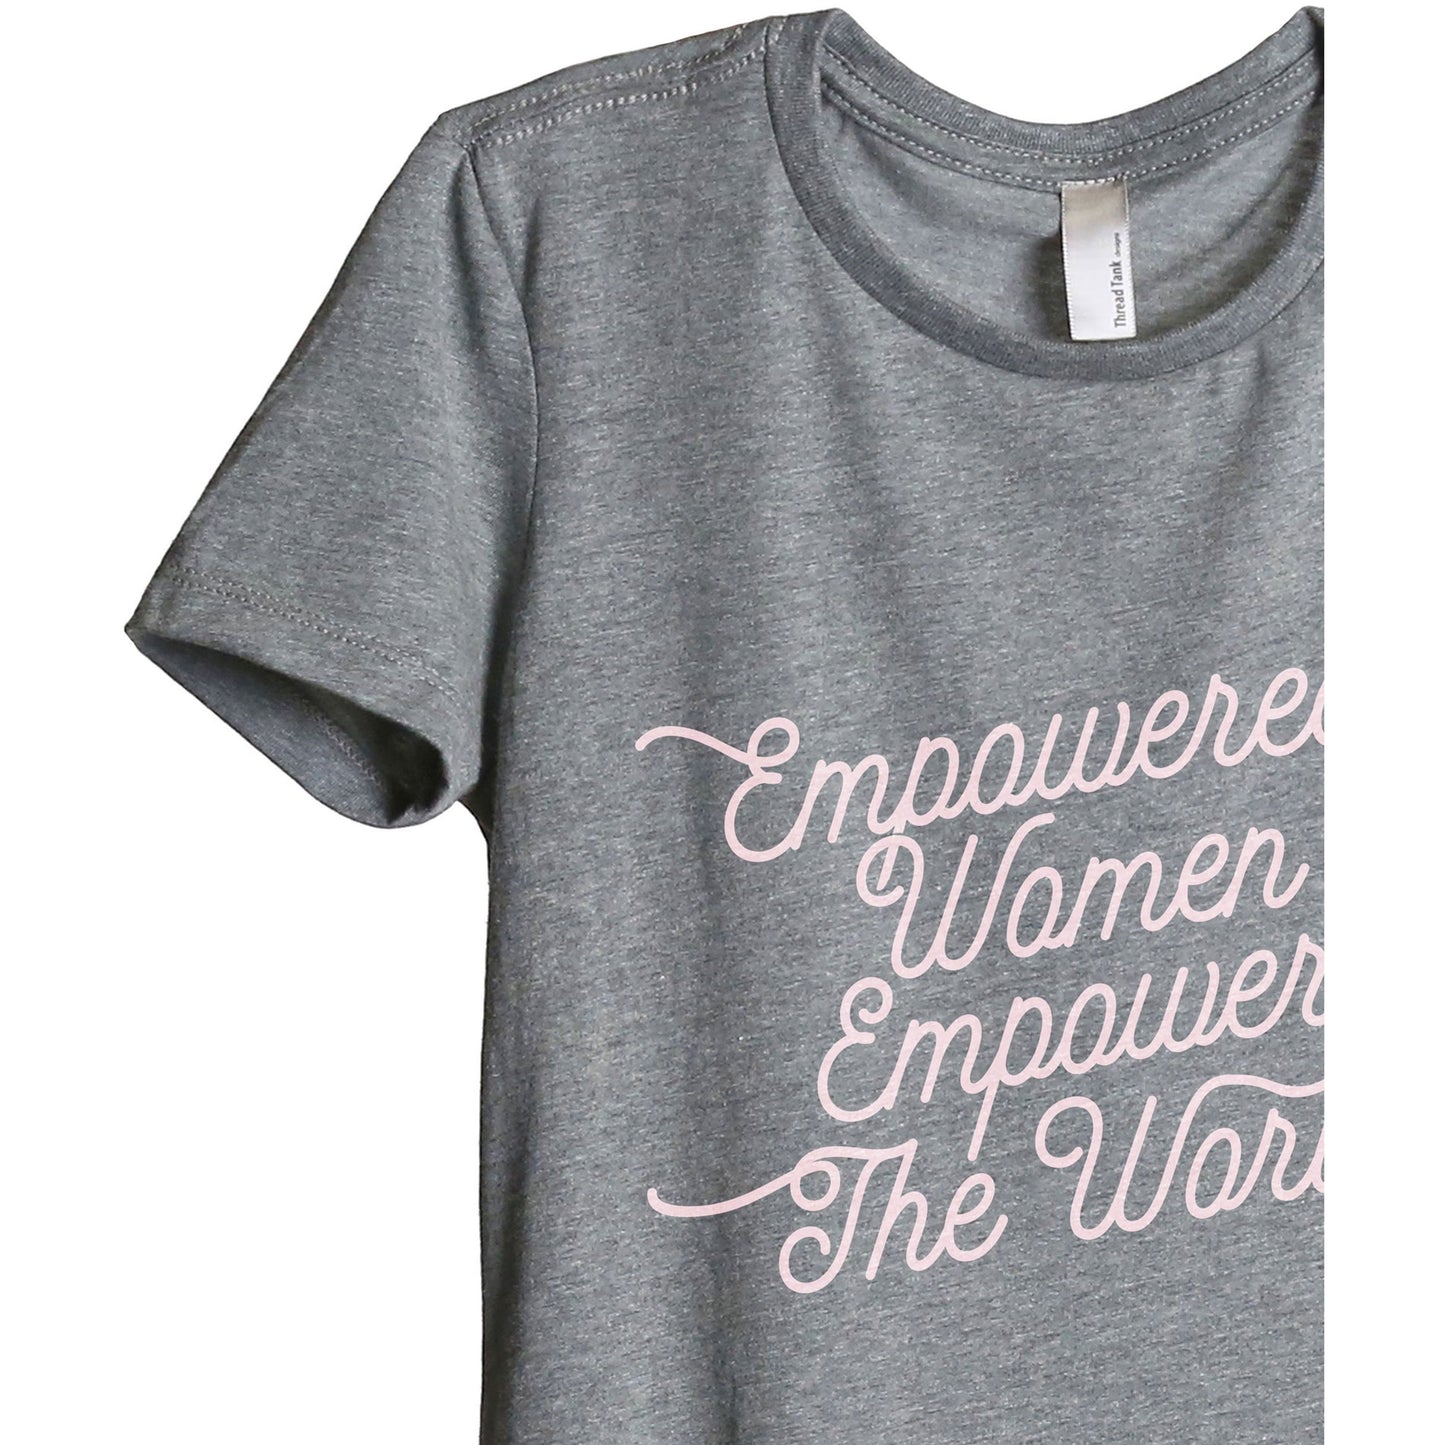 Empowered Women Empower The World Women's Relaxed Crewneck T-Shirt Top Tee Heather Grey Closeup Details